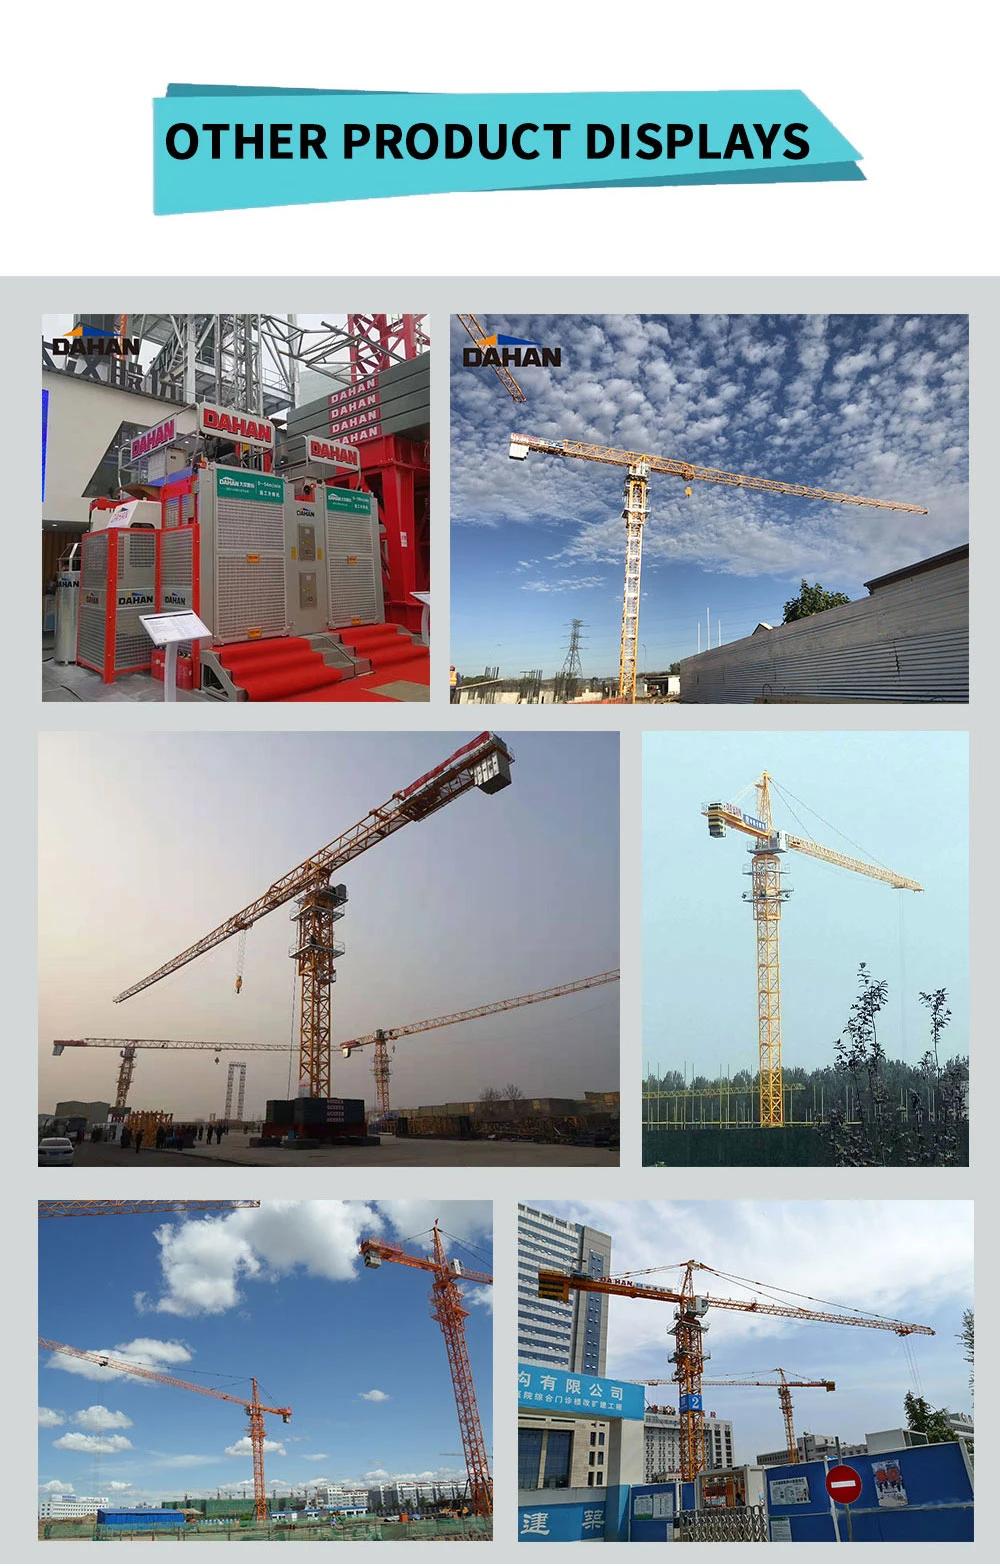 Construction Building Self Erecting Foldable Mini Crane Mobile Tower Crane